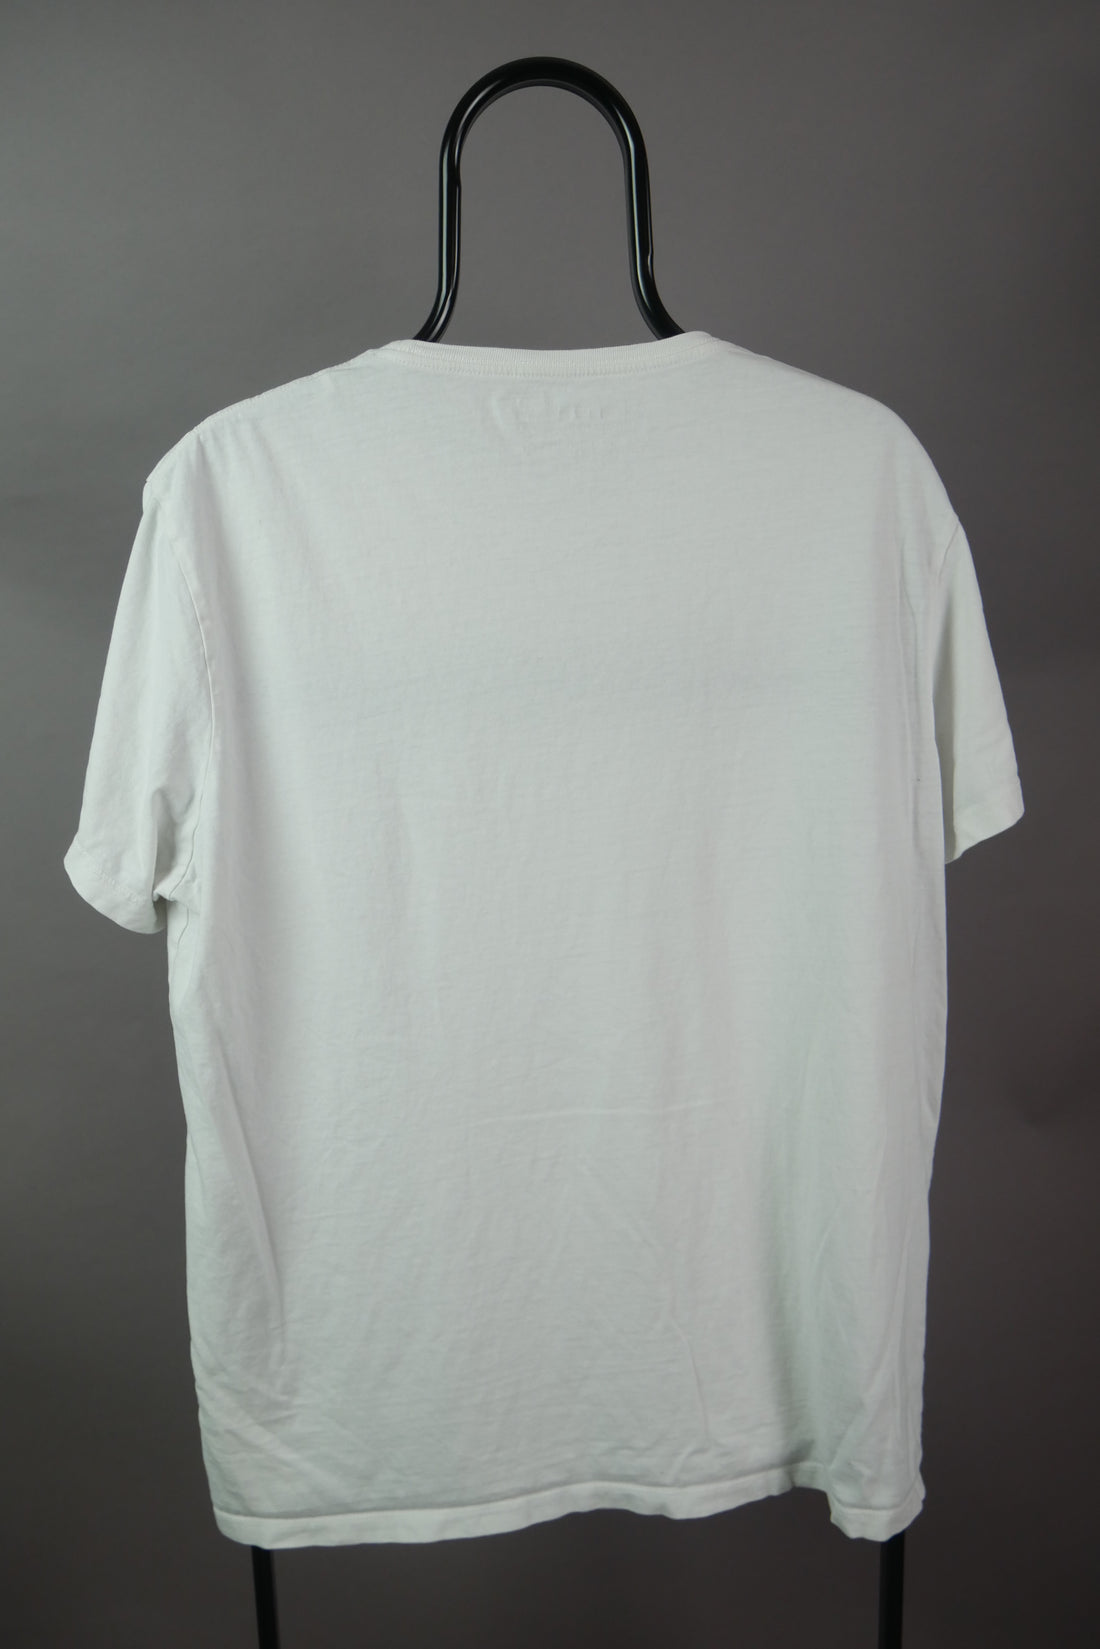 The Timberland T-Shirt (XL)